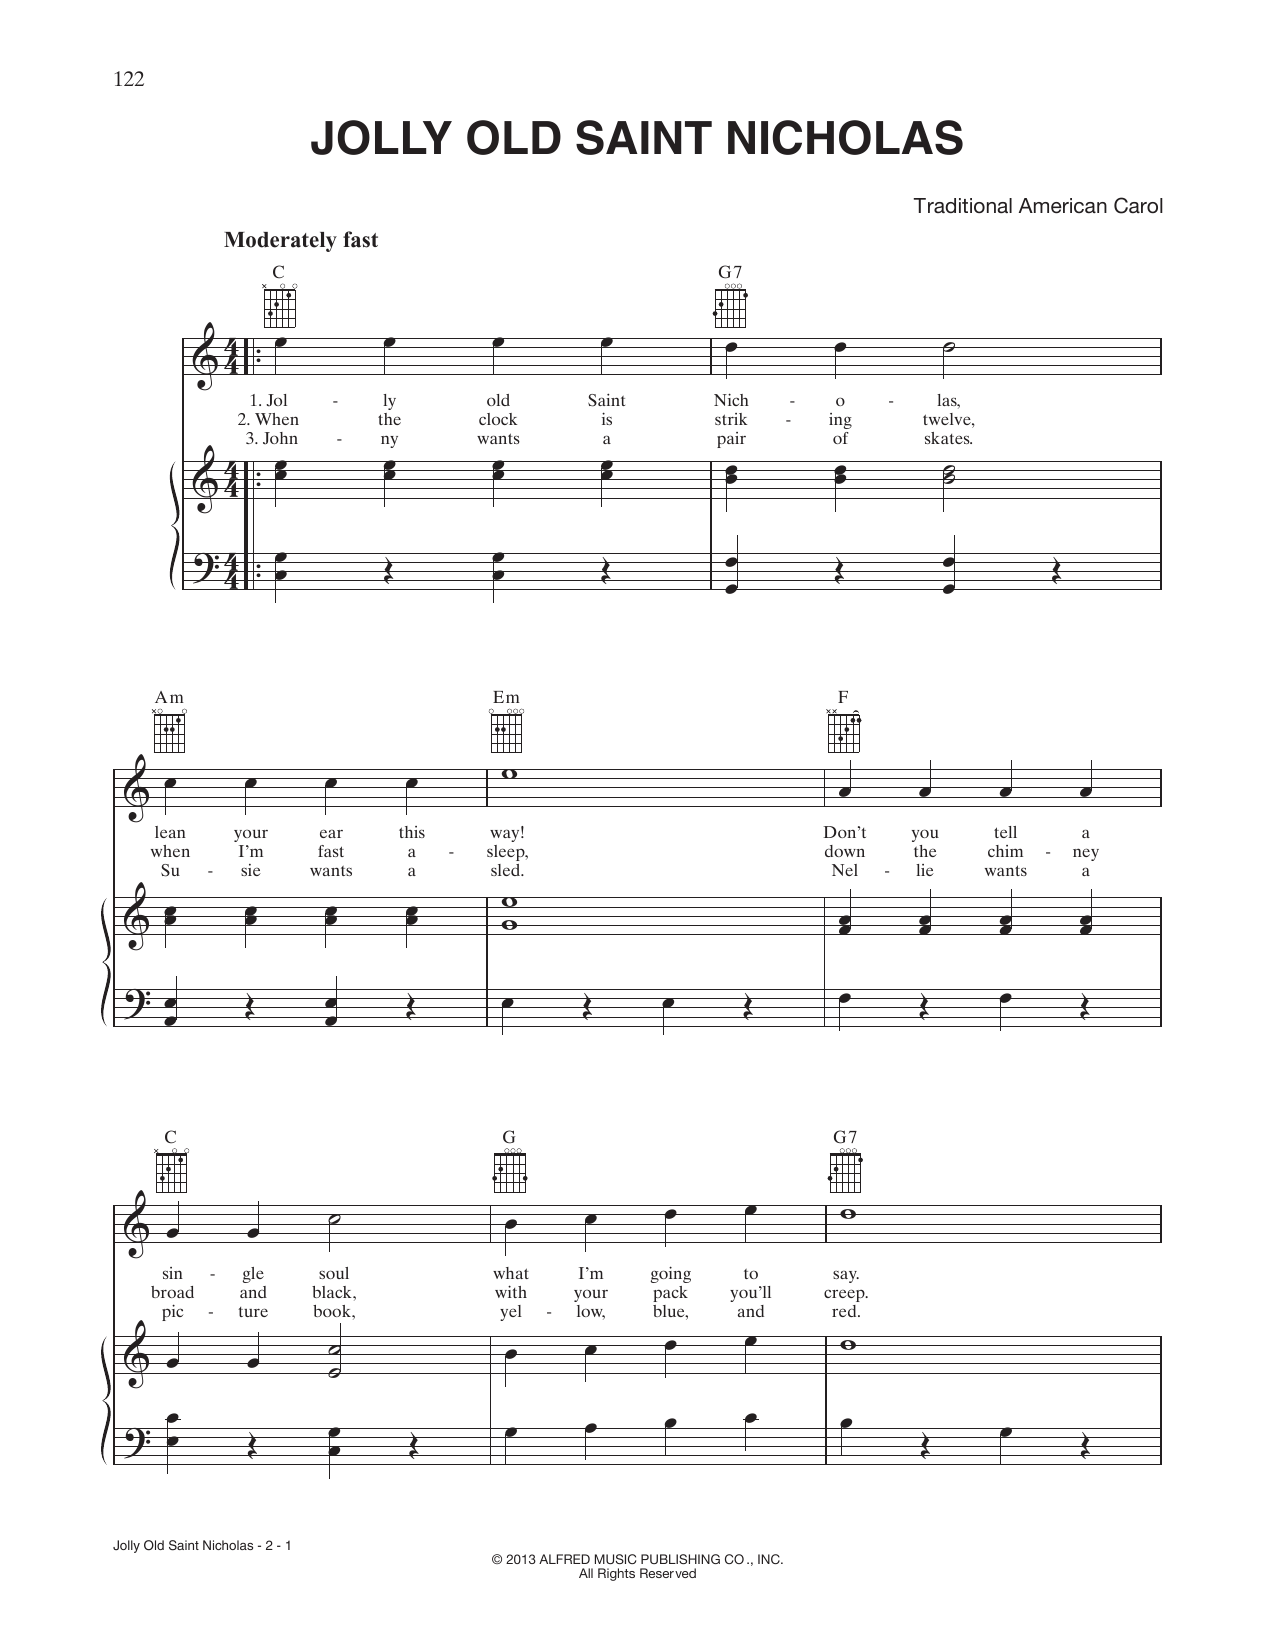 Download 19th Century American Carol Jolly Old St. Nicholas Sheet Music